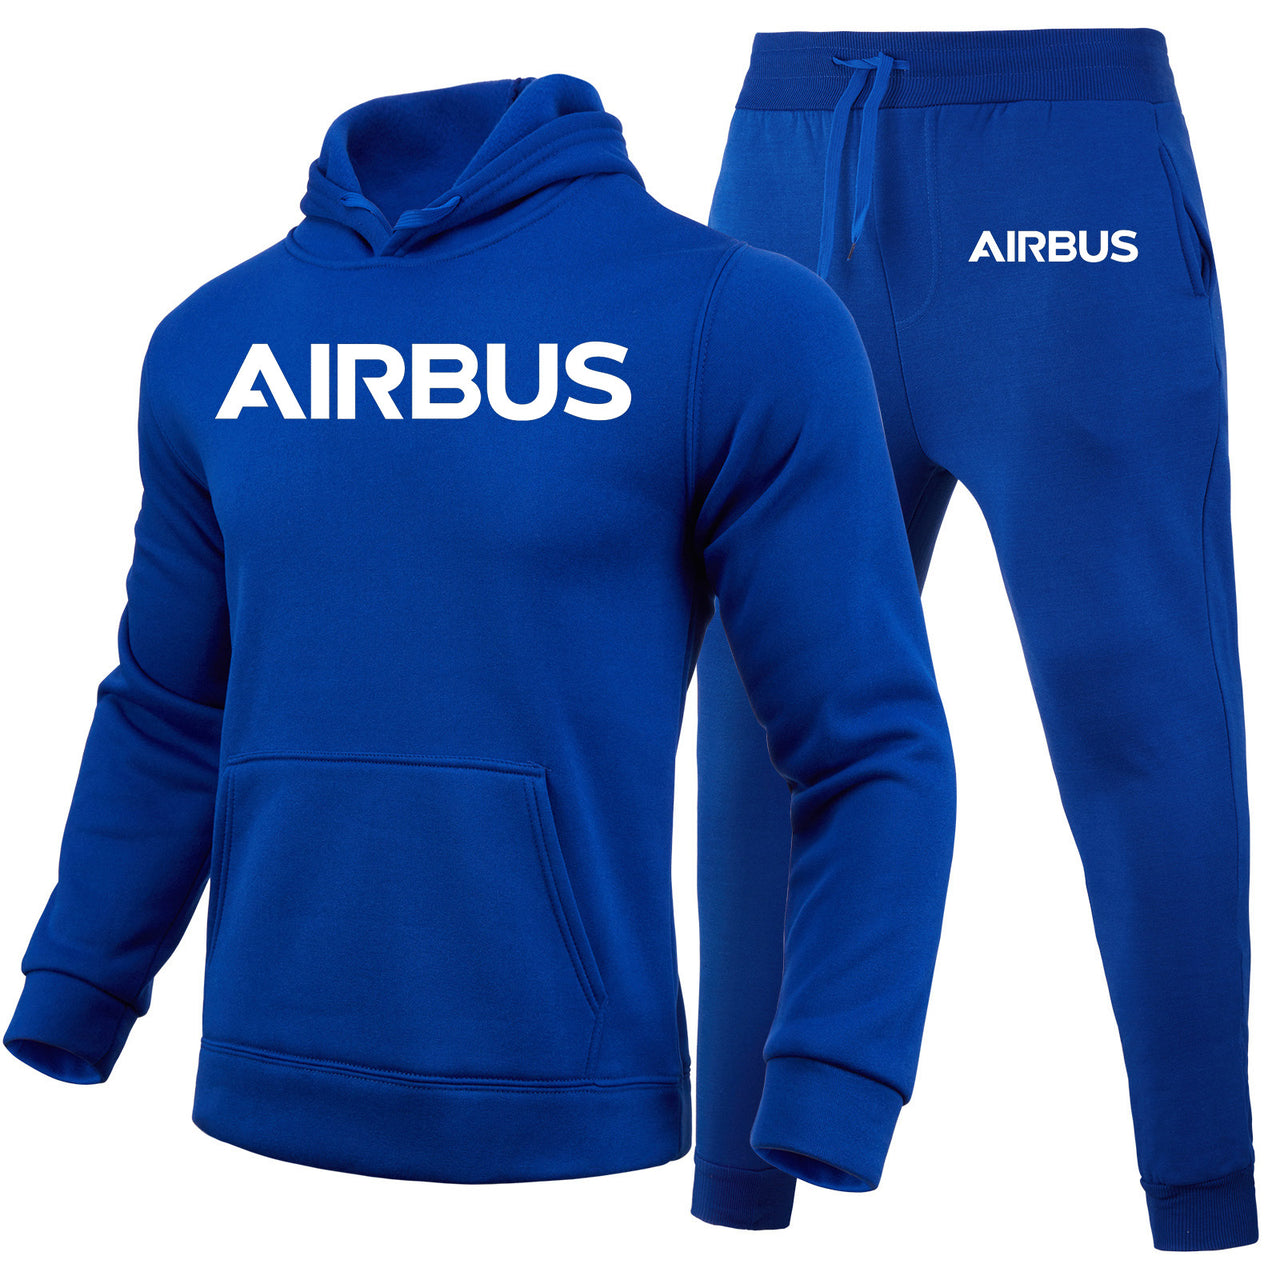 Airbus & Text Designed Hoodies & Sweatpants Set